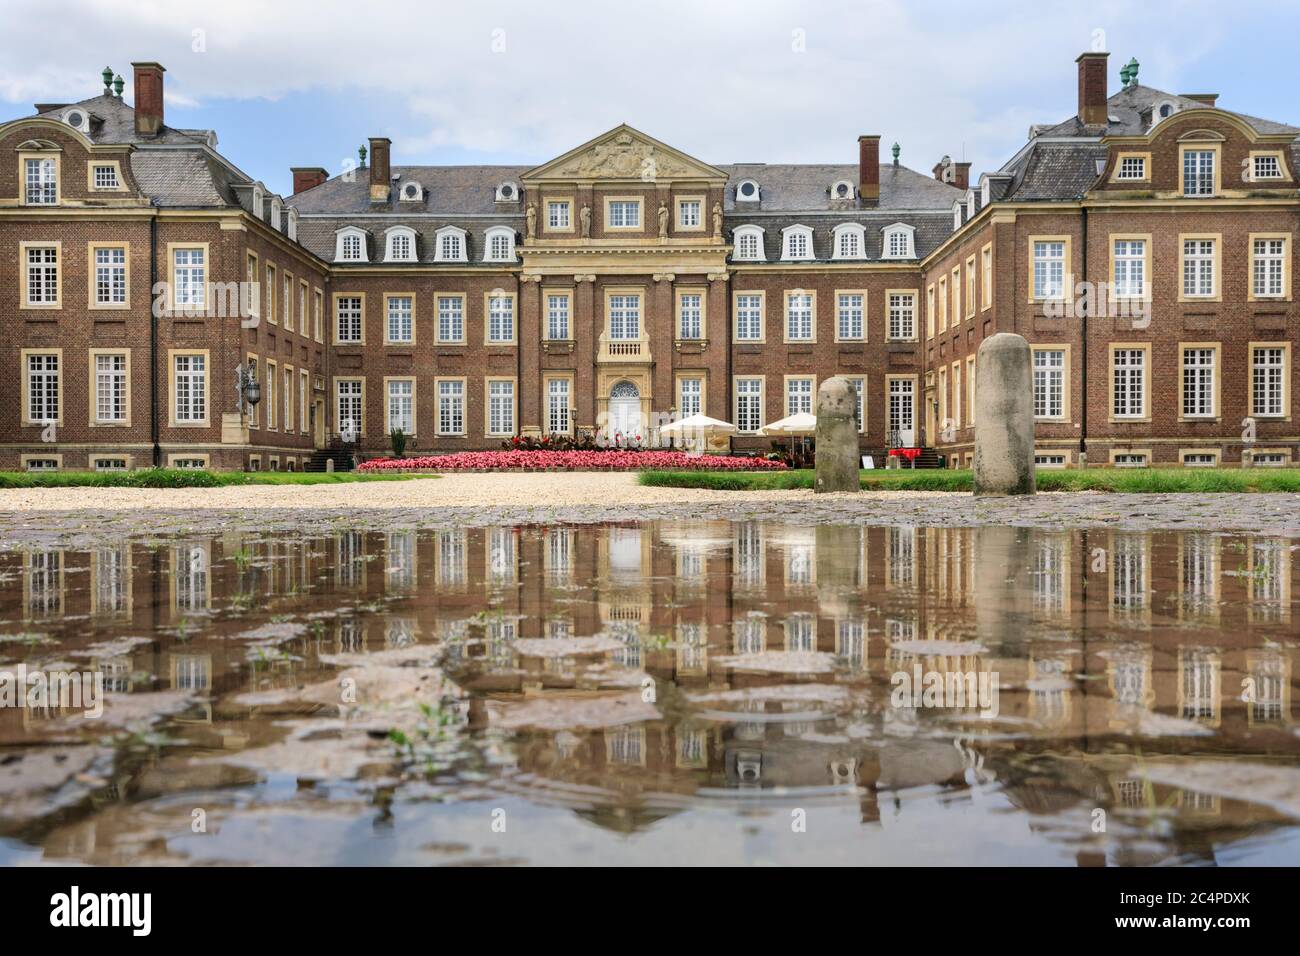 Schloss Nordkirchen, moated castle, Wasserschloss, Nordkirchen baroque palace, North Rhine Westphalia, Germany Stock Photo